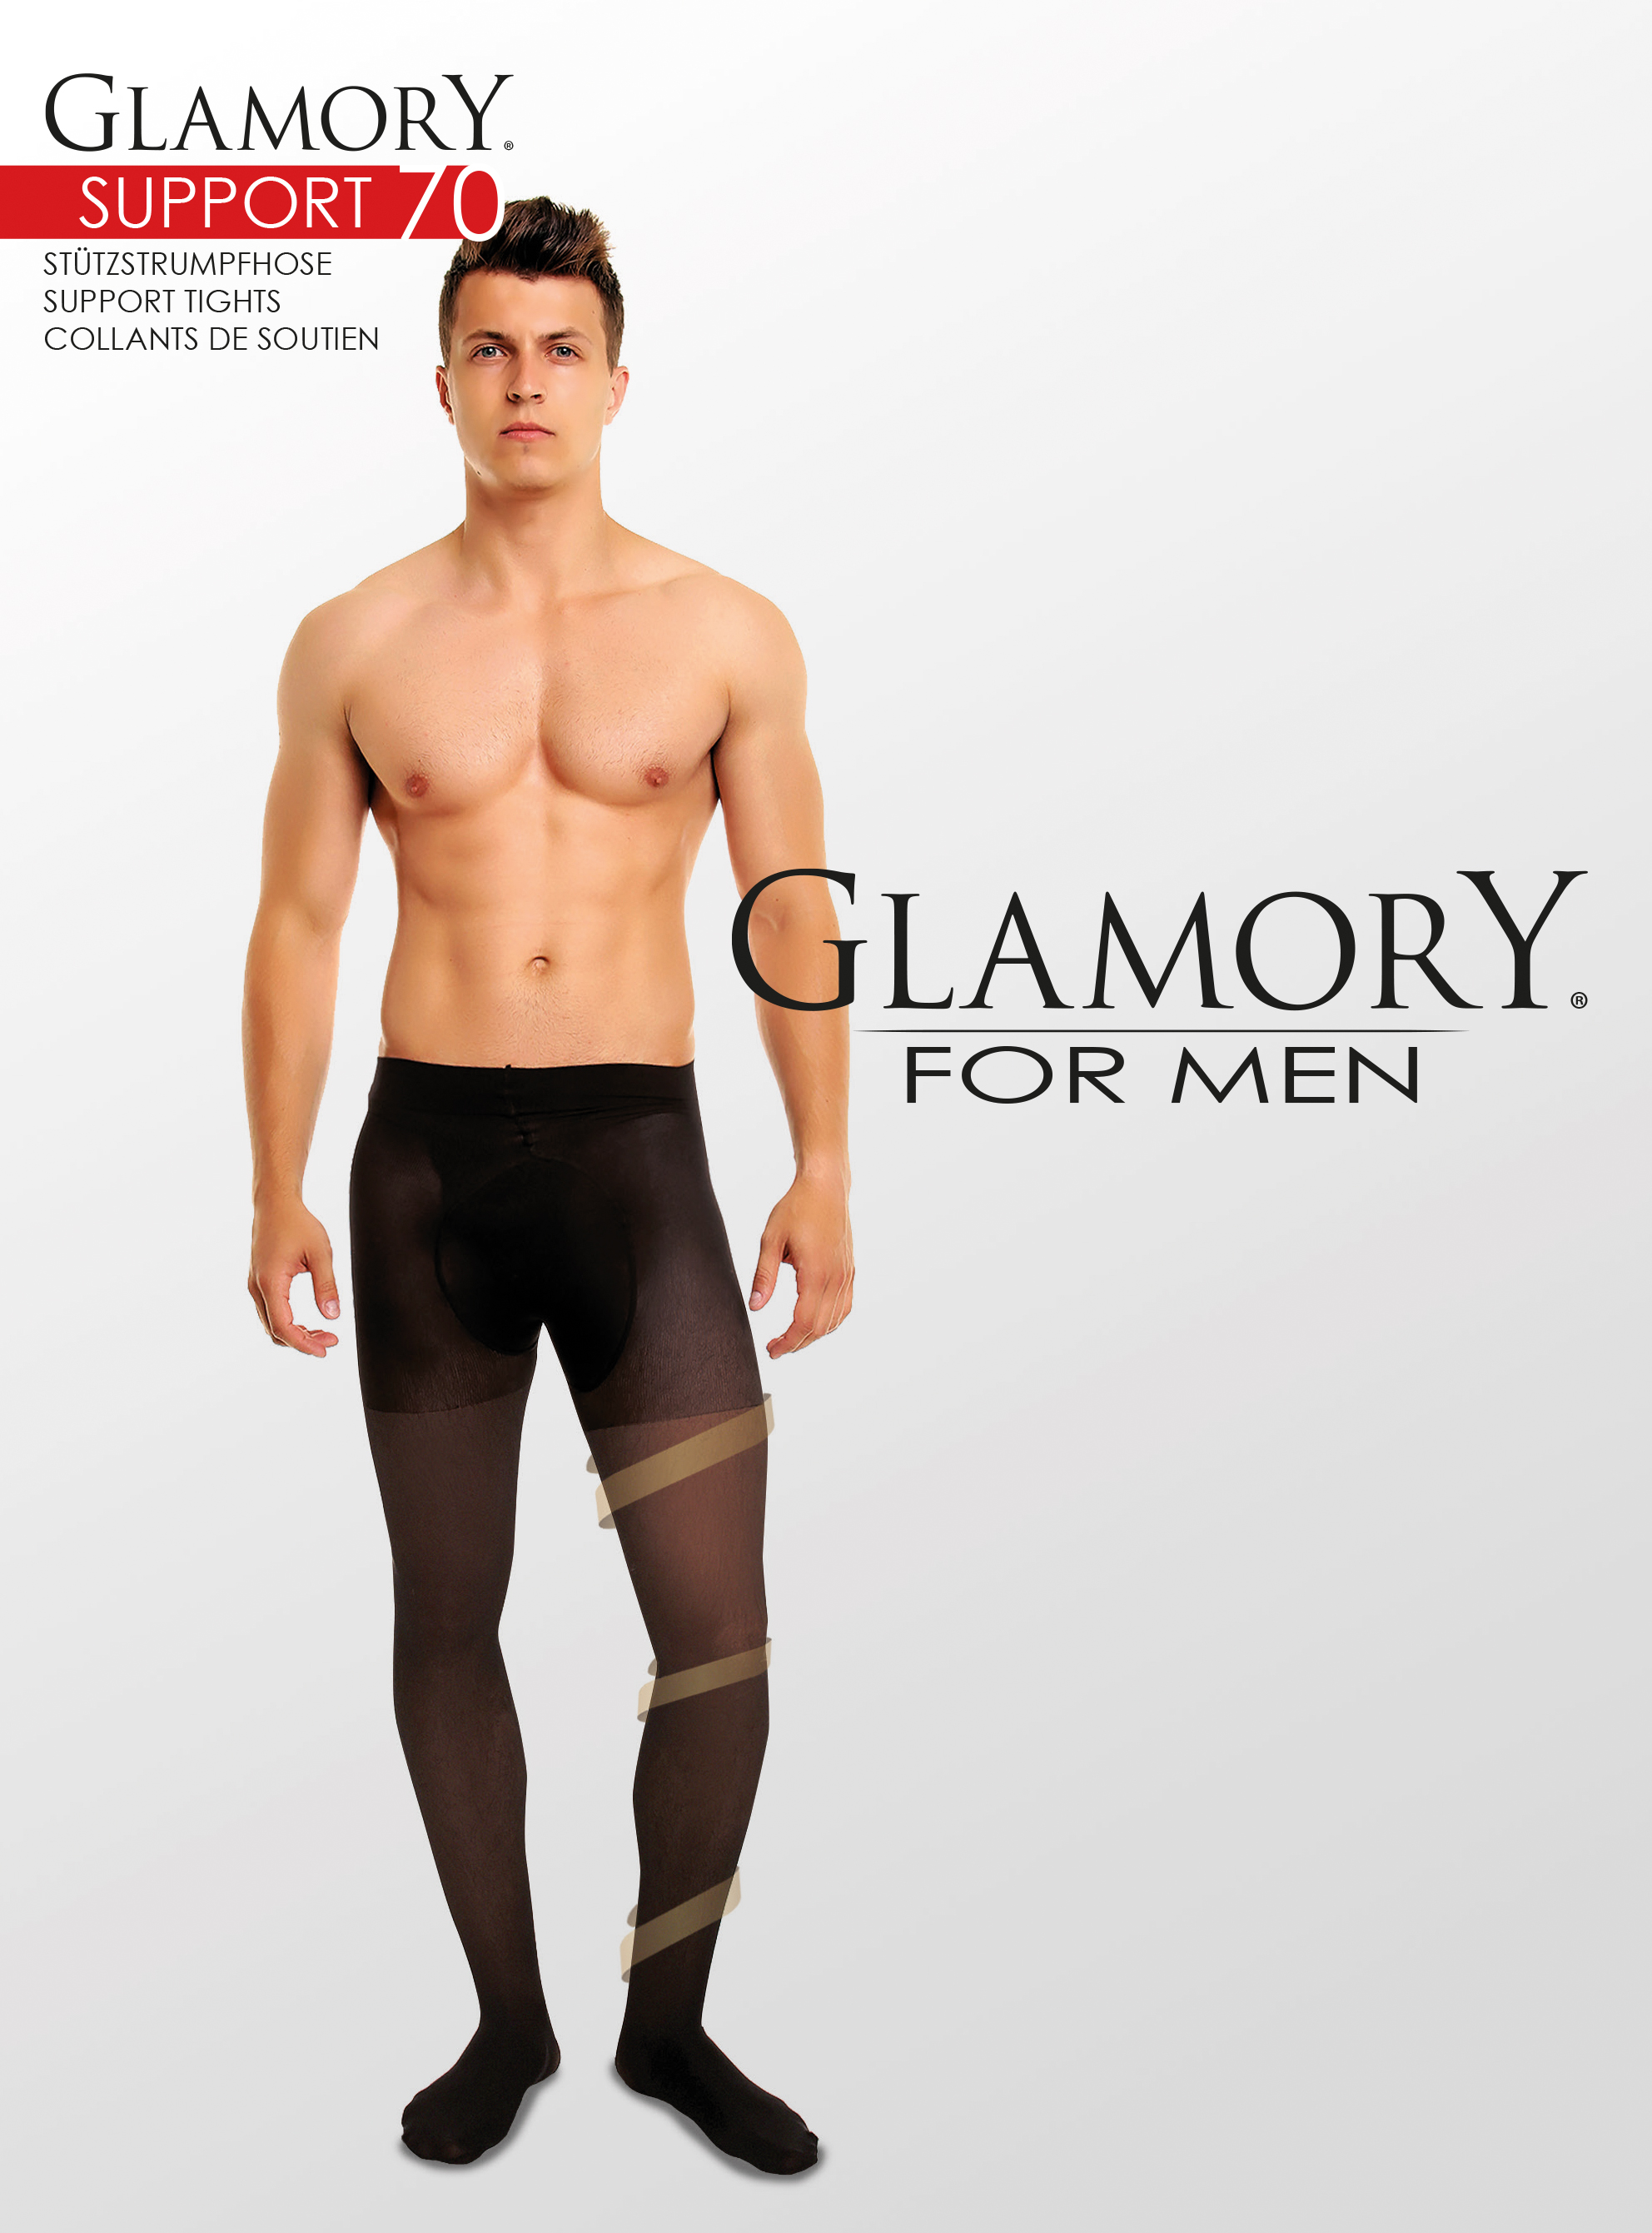 Glamory Support 70 Herrenstützstrumpfhose (3er Pack)